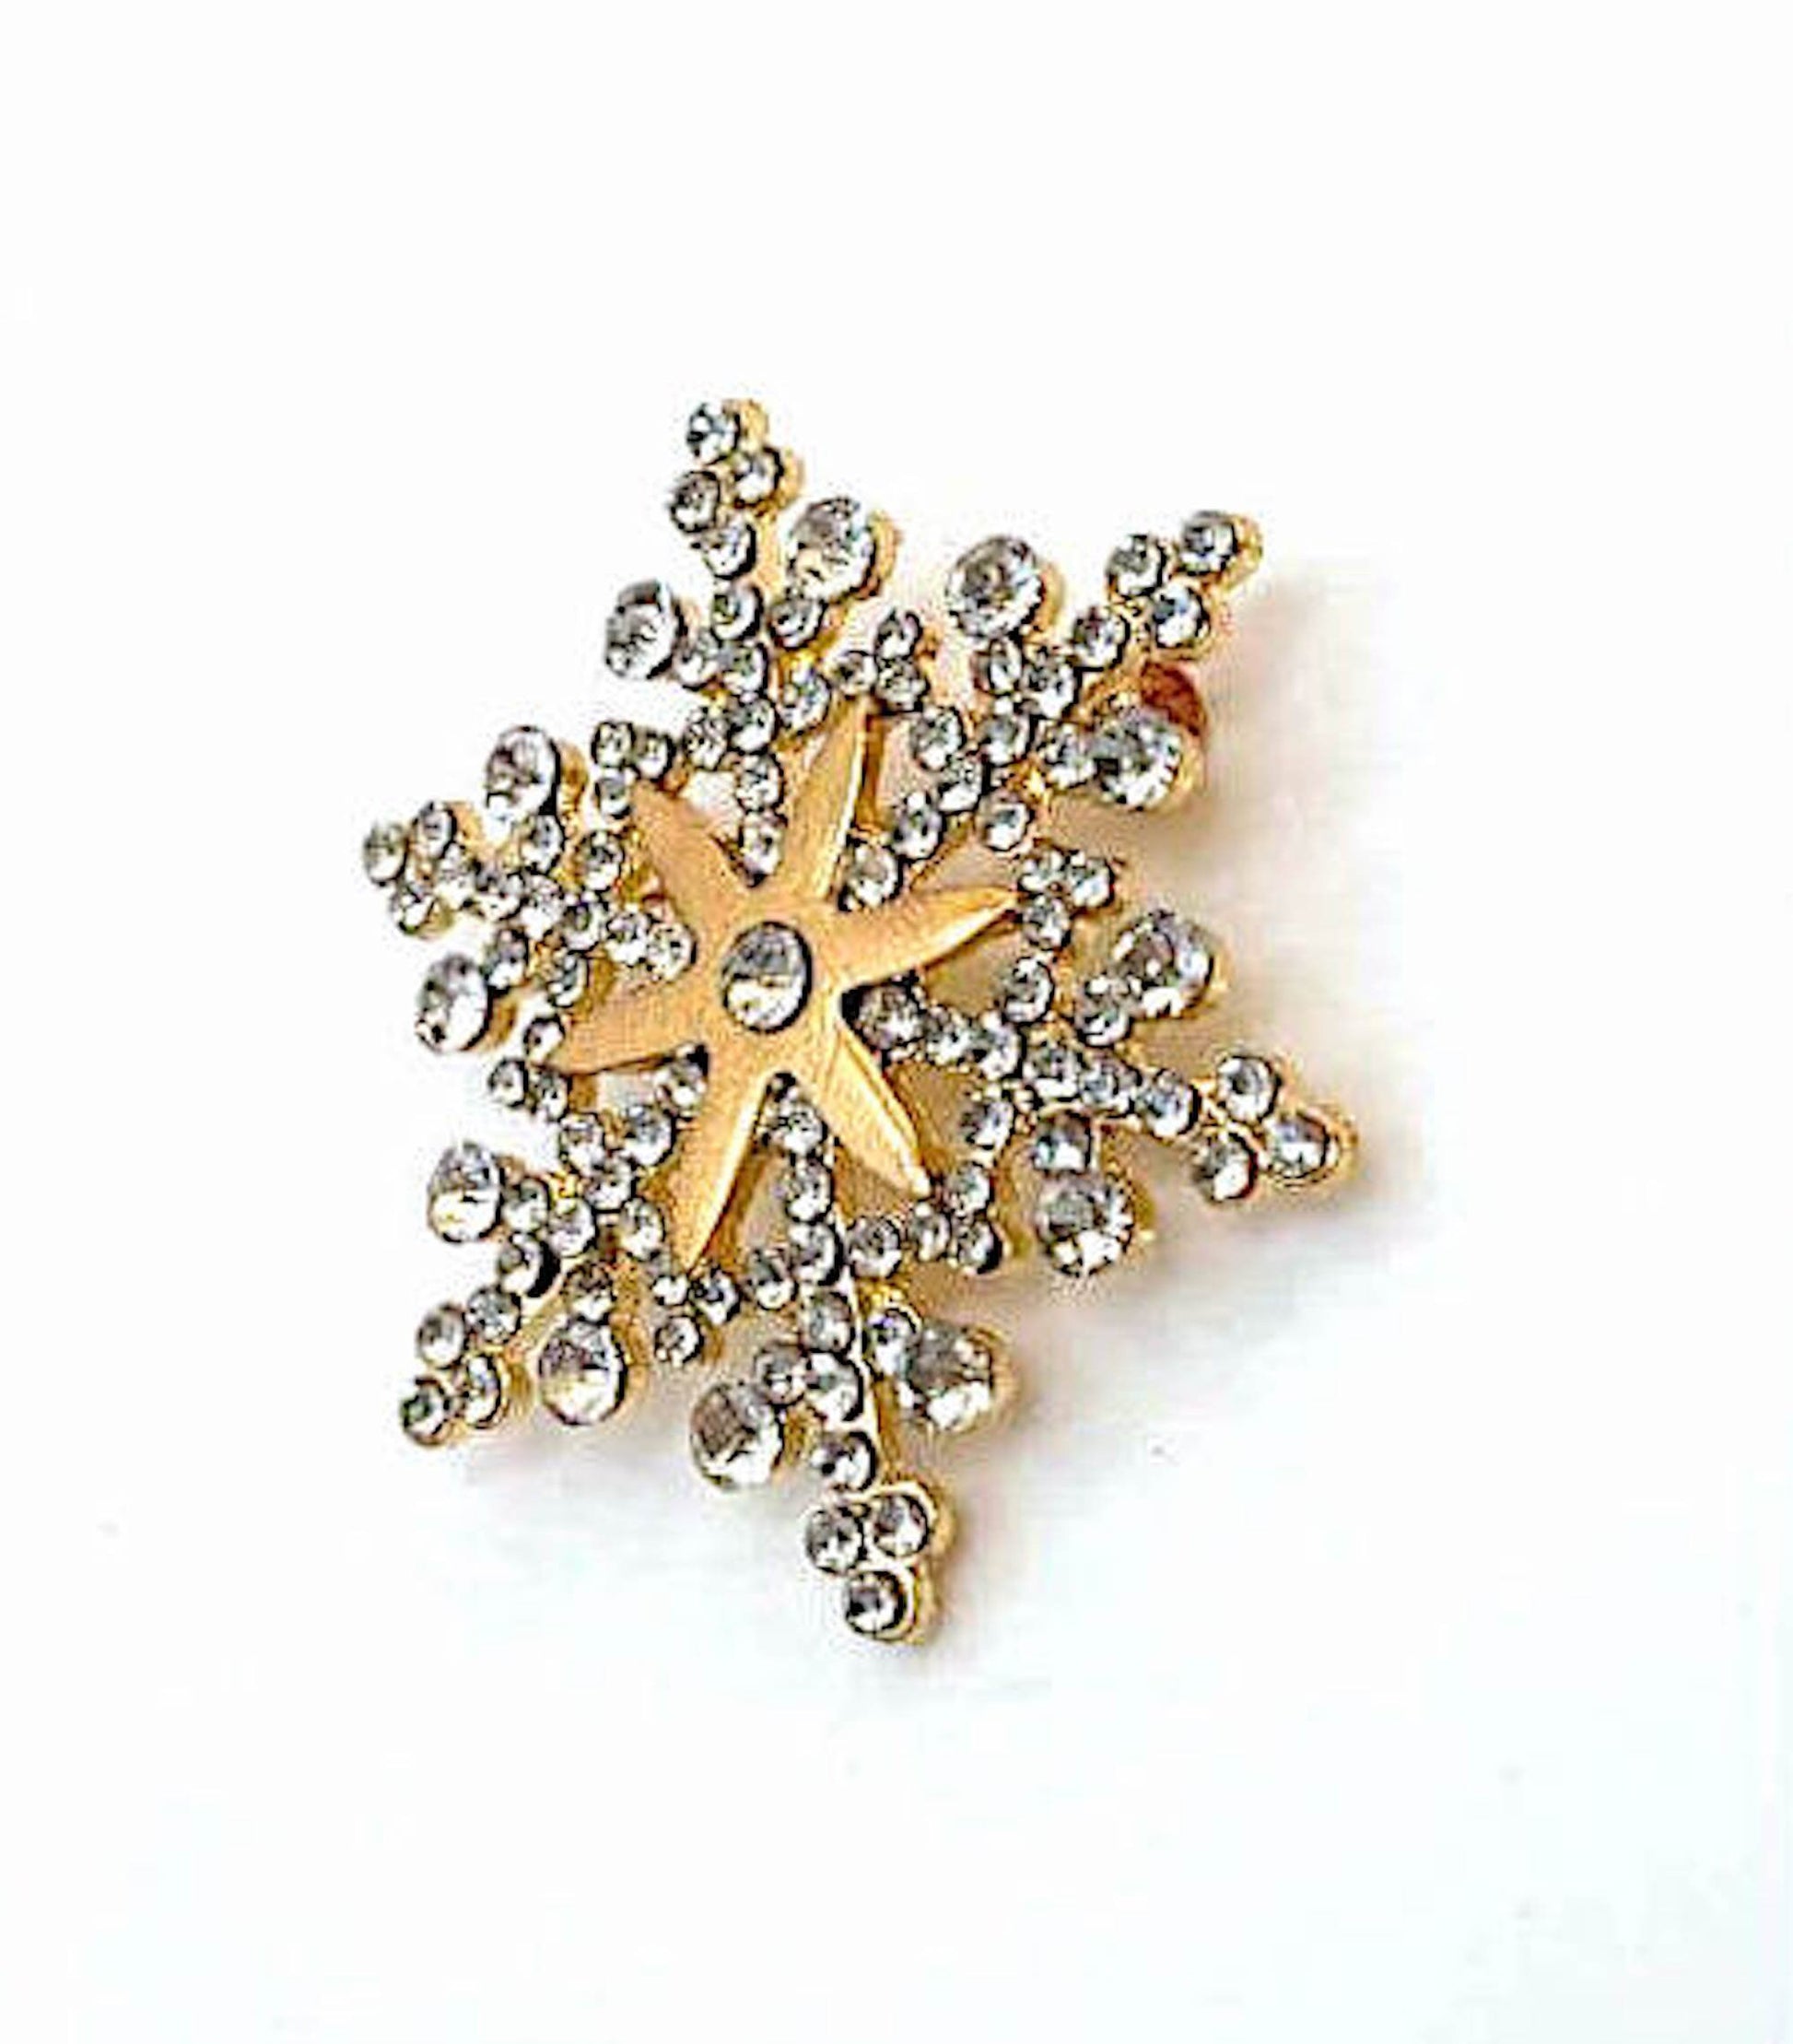 Gold Crystal Snowflake Brooch, Seasonal Pin | Sparkly Christmas Brooch